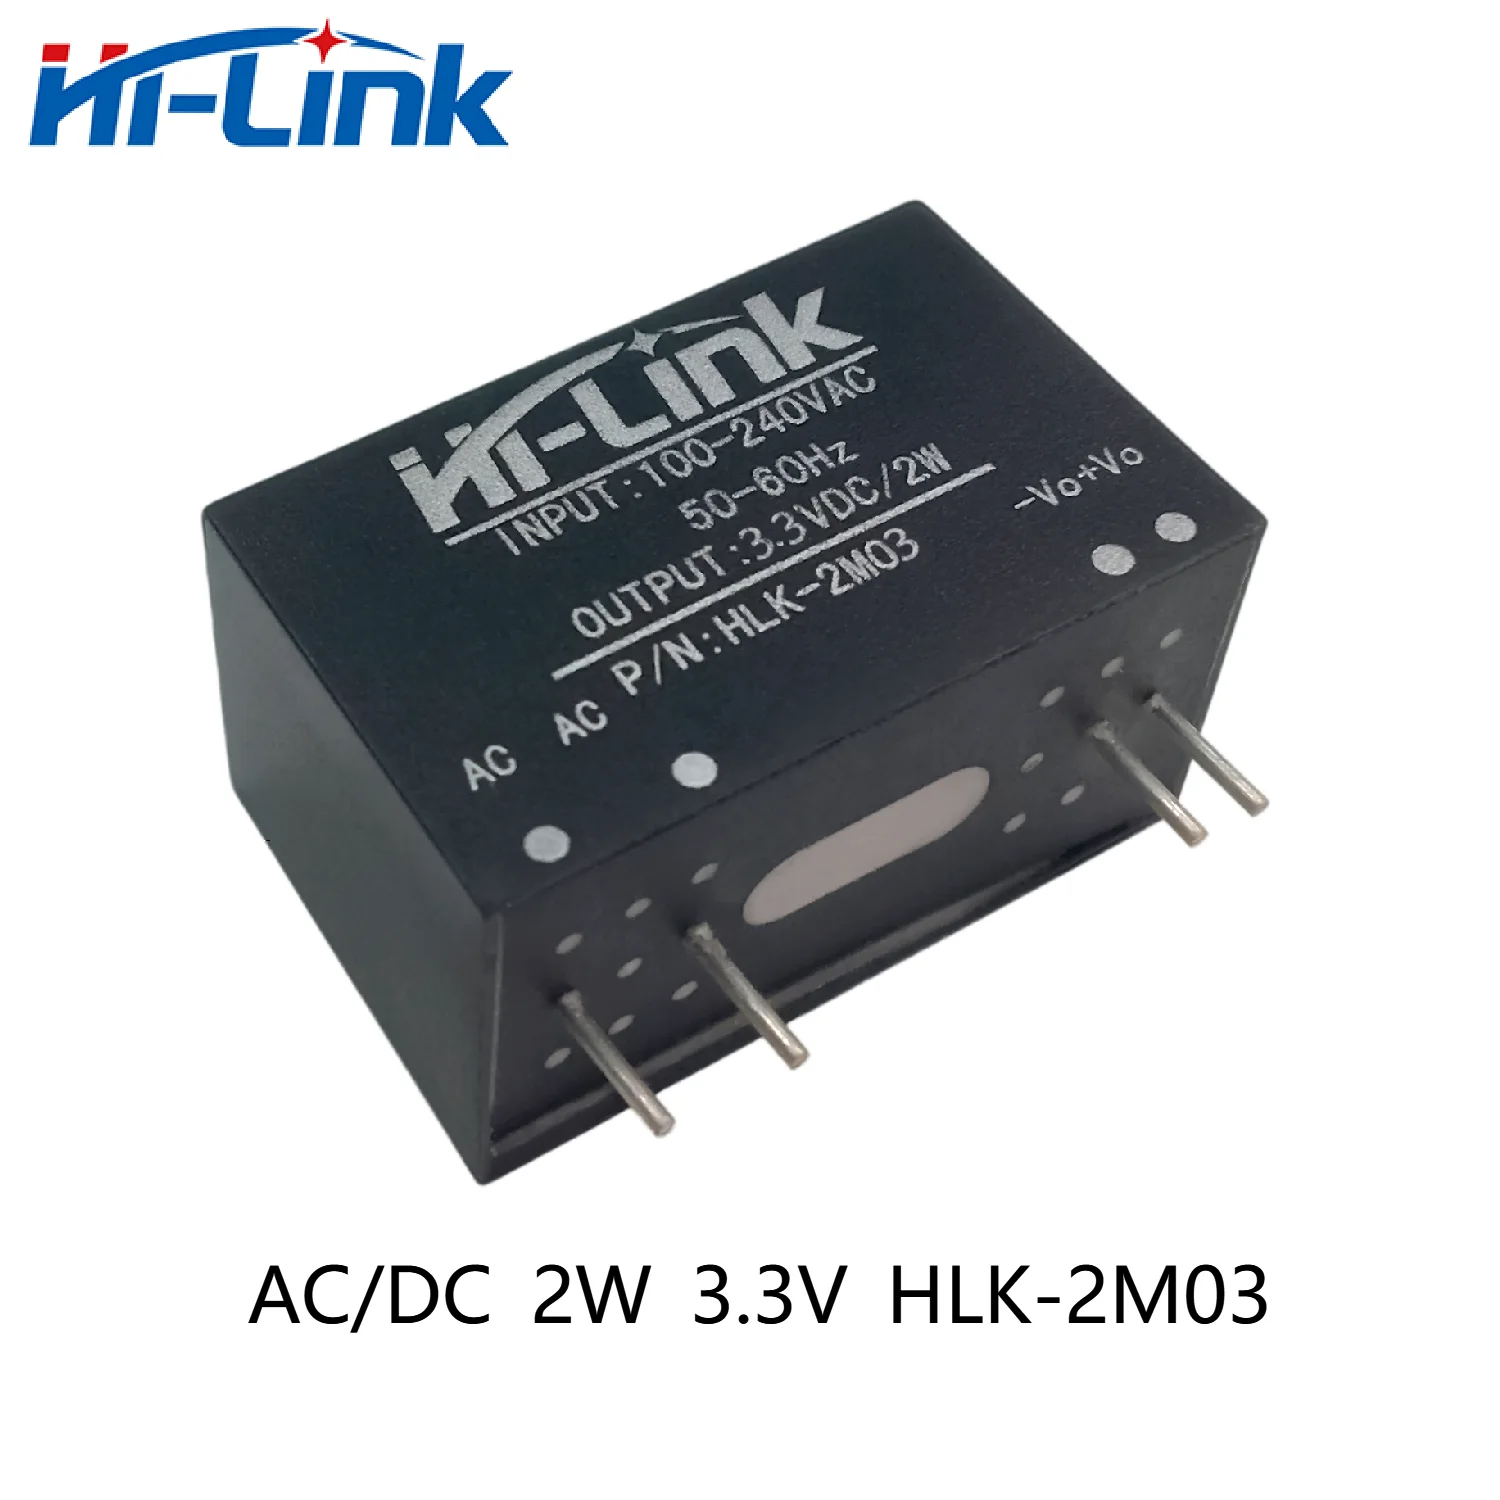 

Free shipping Hi-Link 3.3V 2W 600mA output AC/DC power transformer HLK-2M03 mini size high efficiency safety isolation